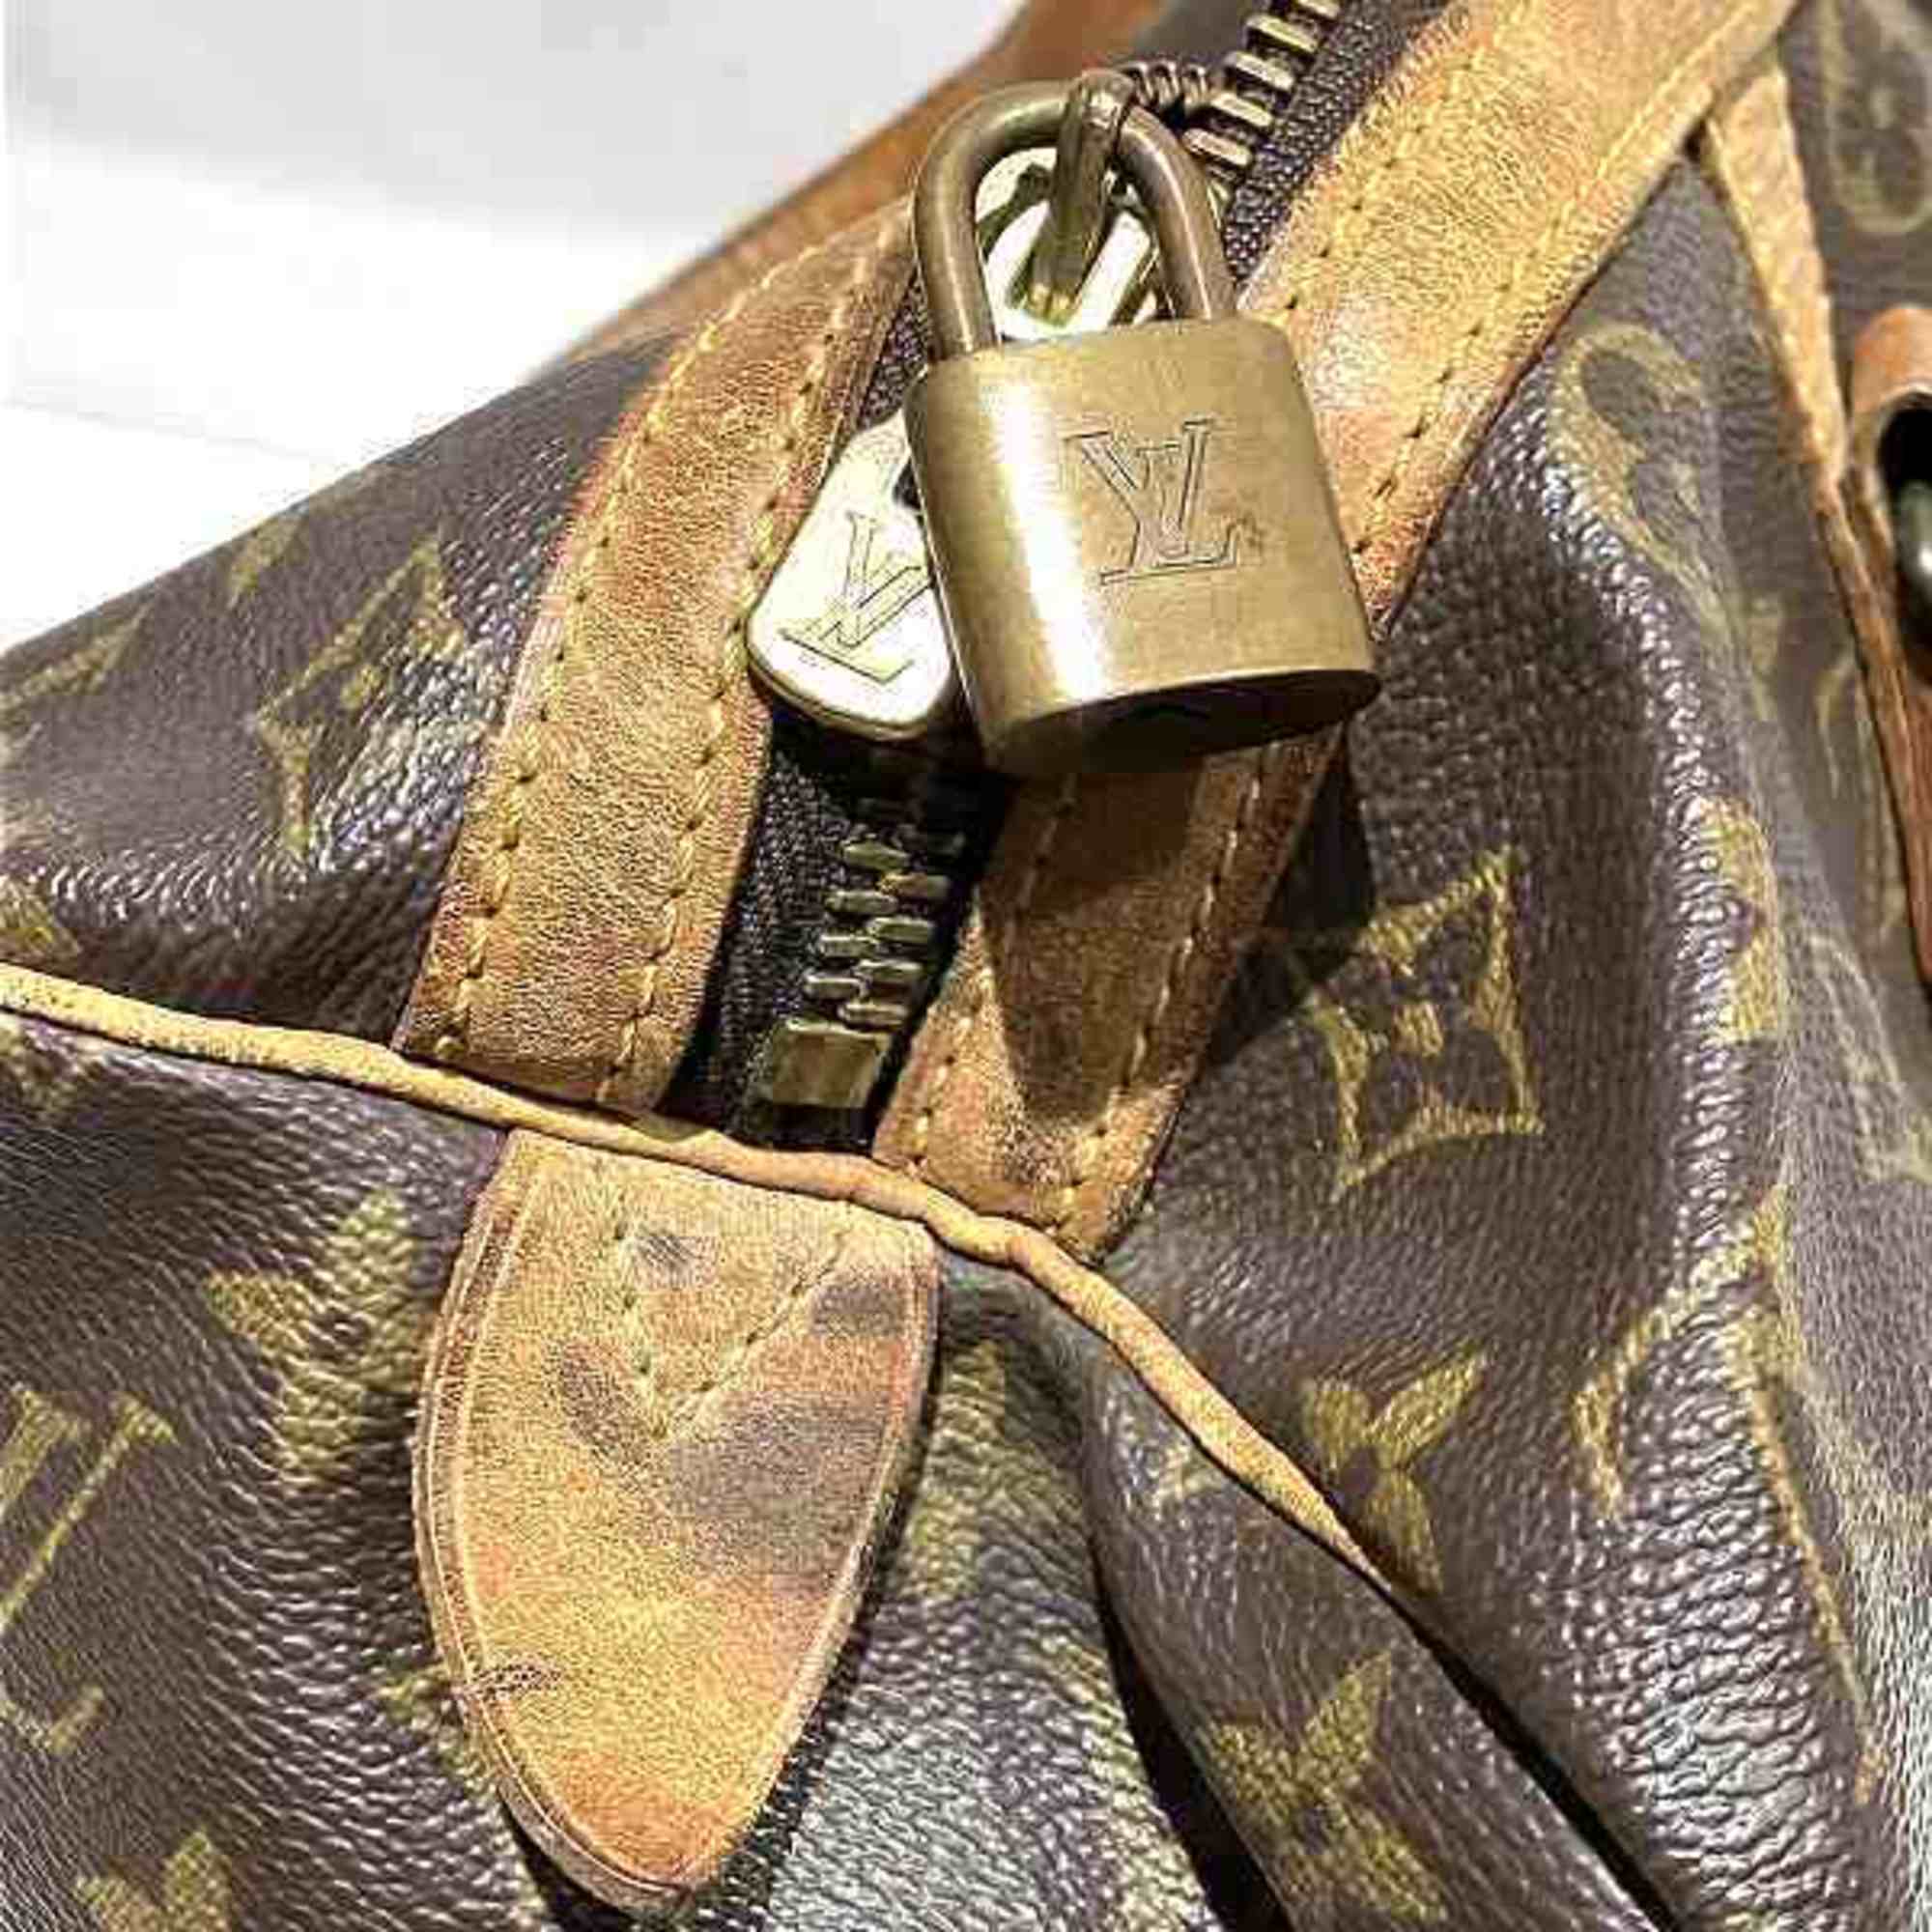 Louis Vuitton Monogram Saxe Souple 35 M41626 Bags, Handbags, Boston Men's and Women's